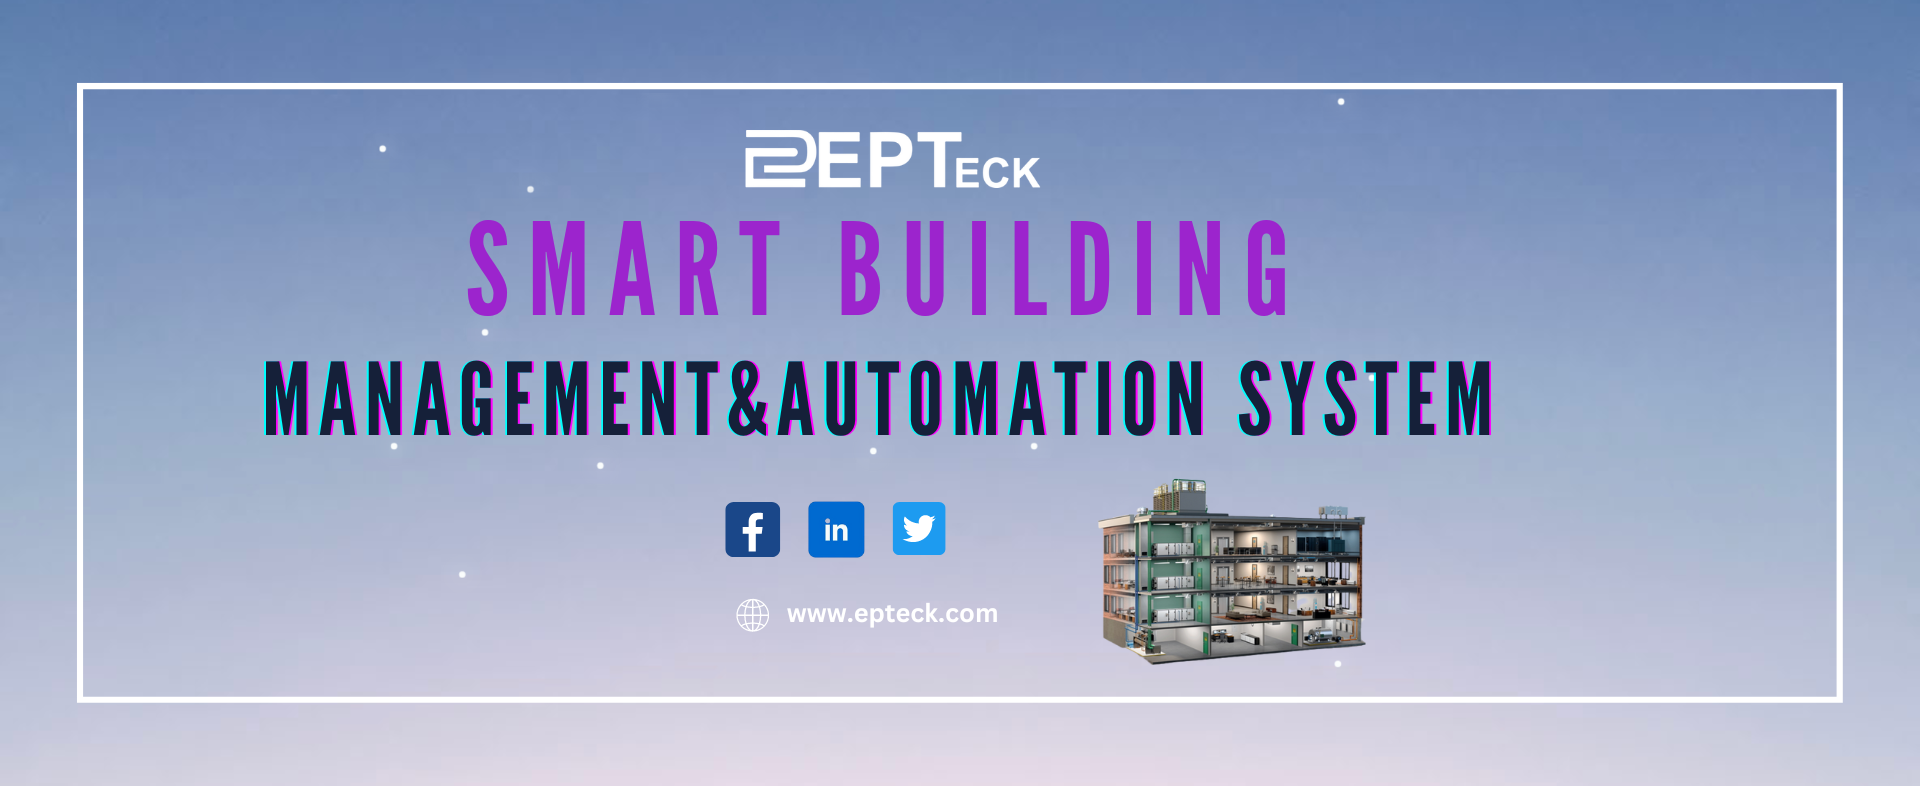 Case Study: Smart Building Management & Automation System